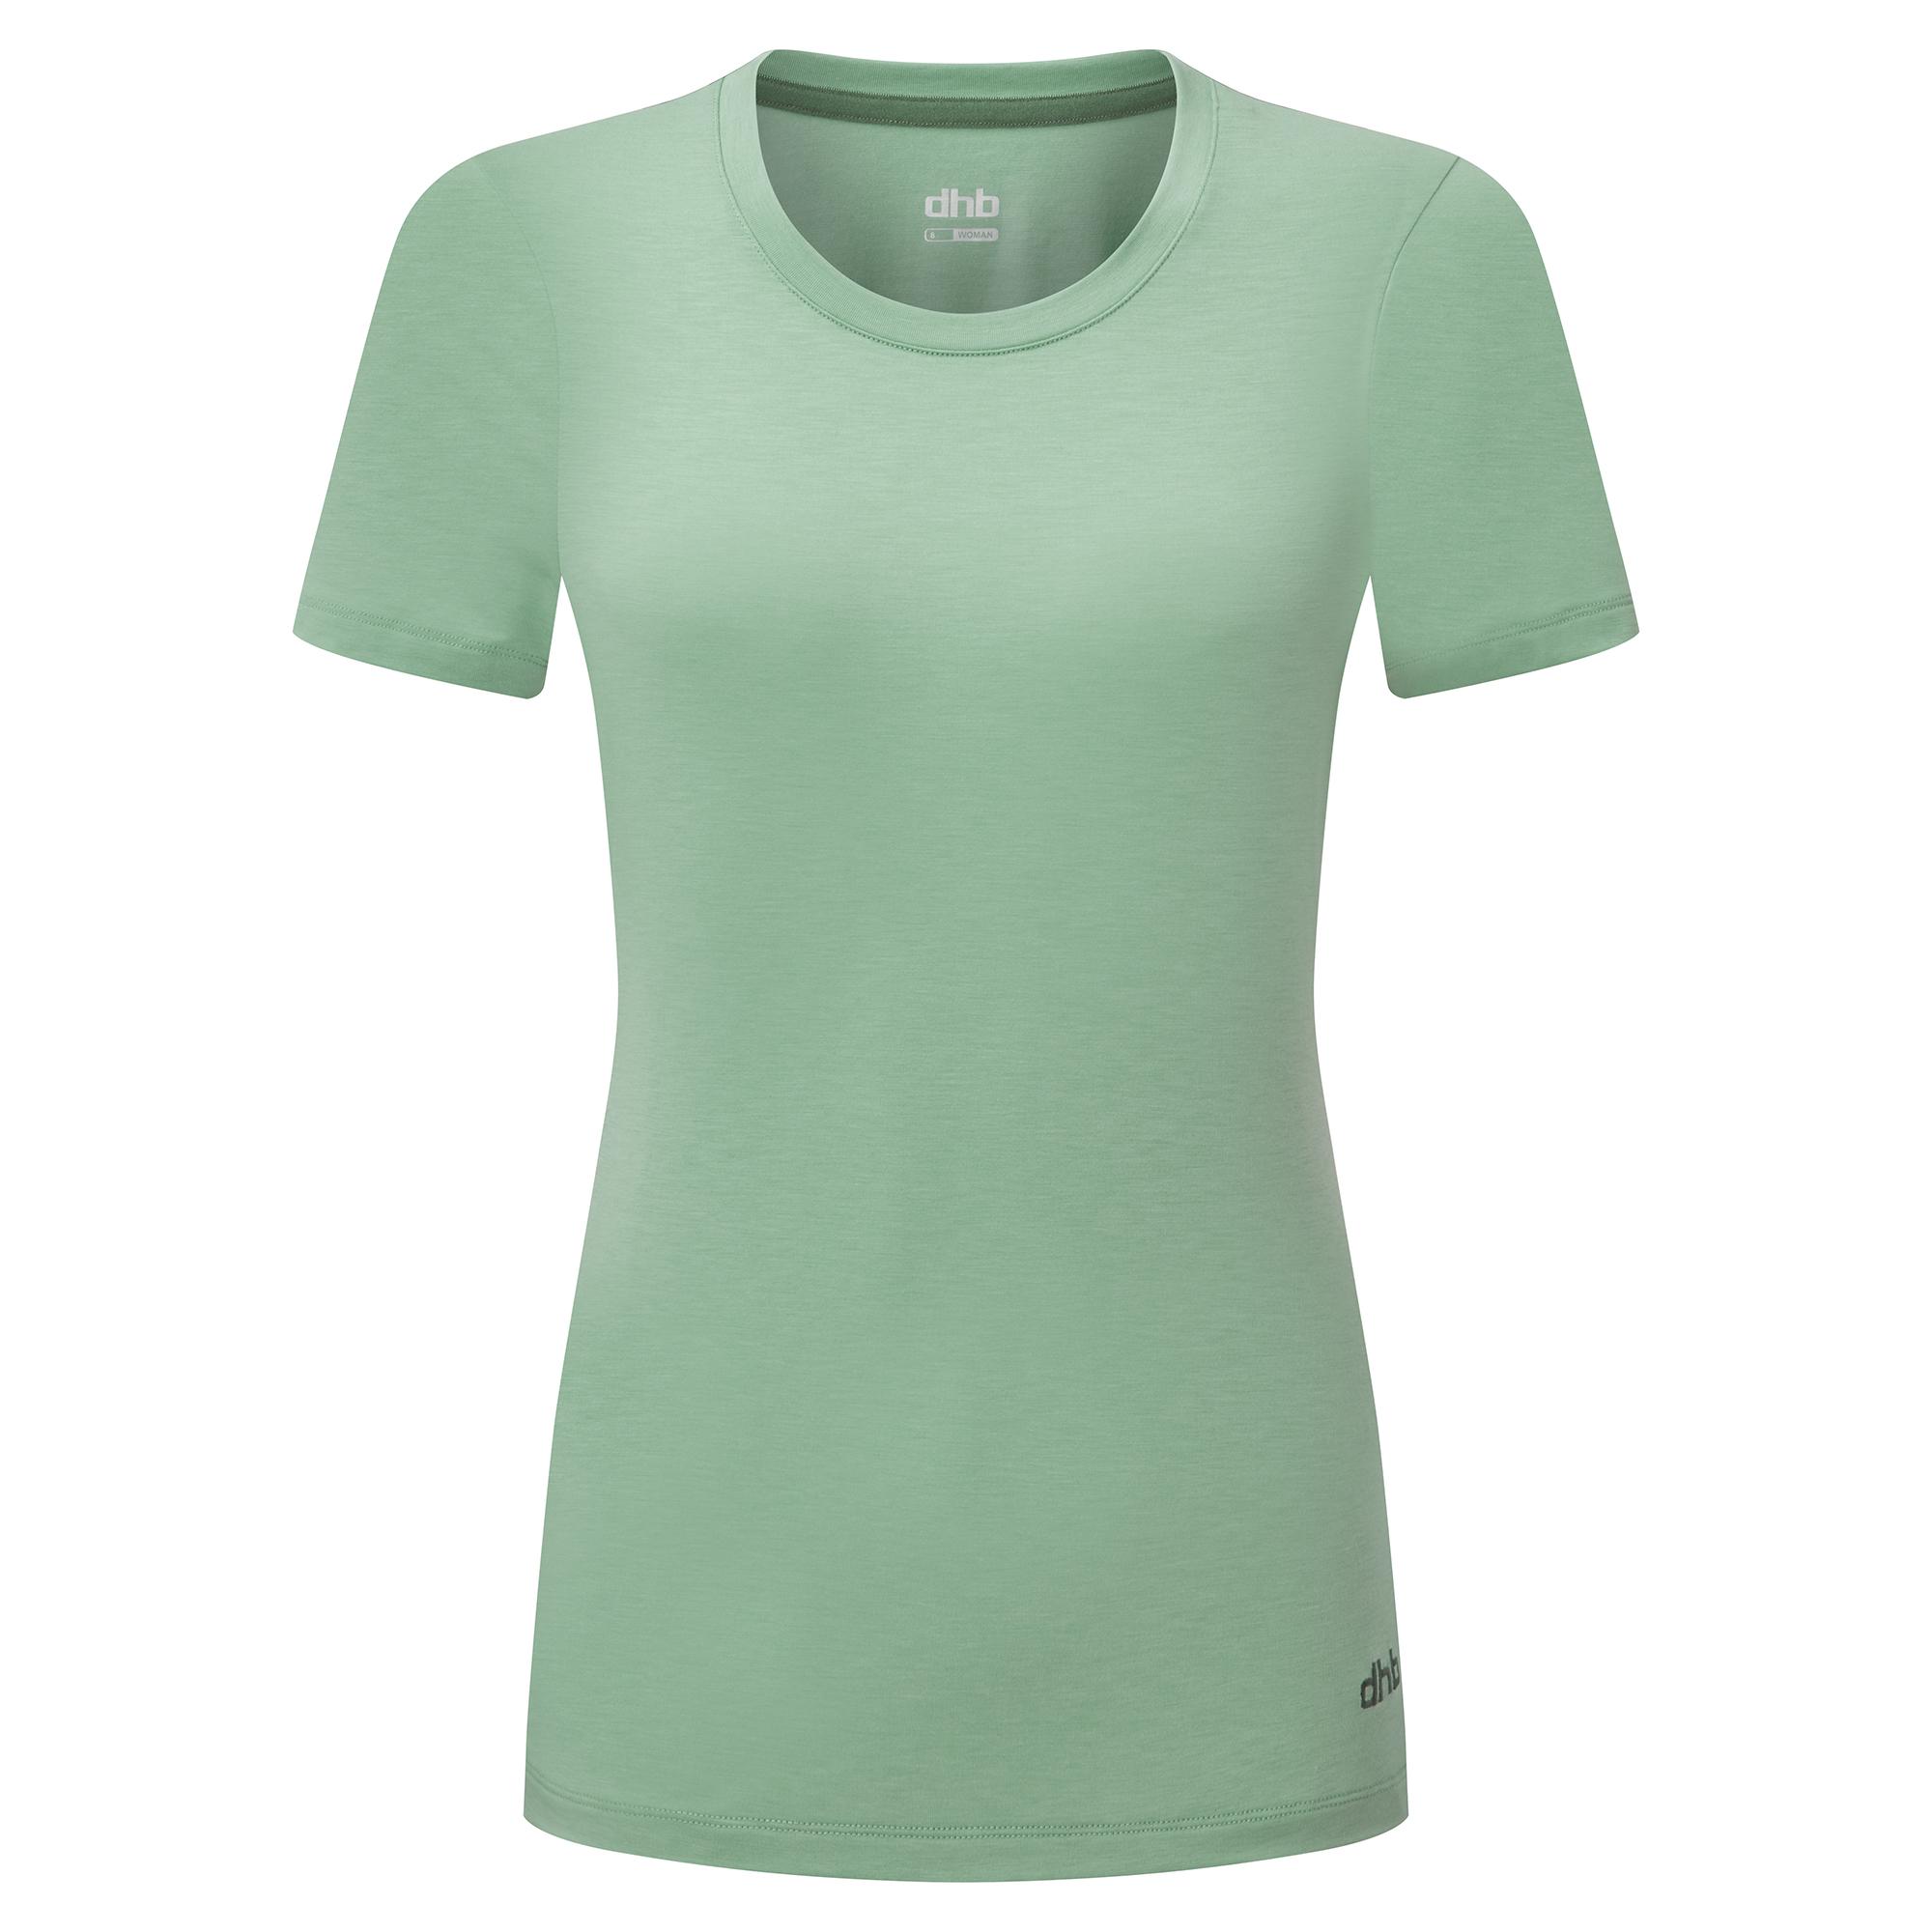 Dhb Trail Womens Short Sleeve Jersey - Drirelease  Green